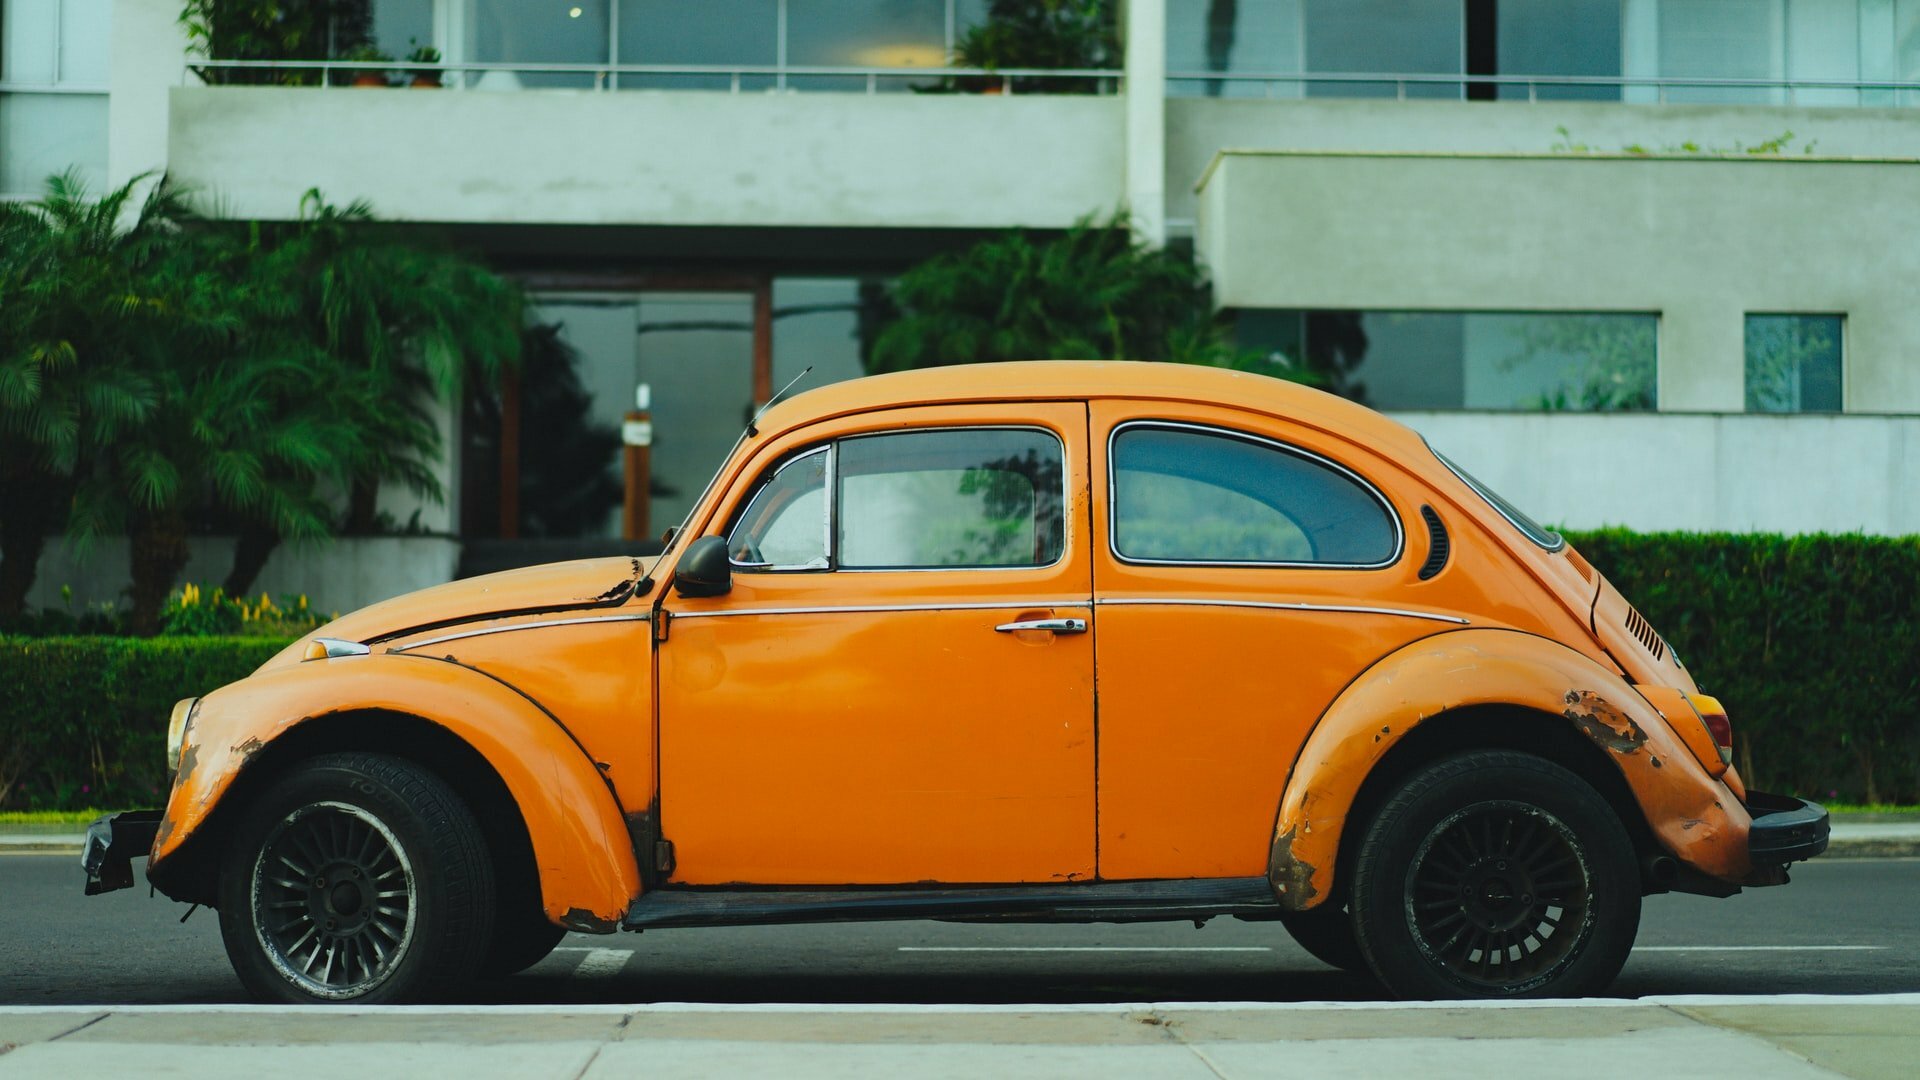 an orange car on the street